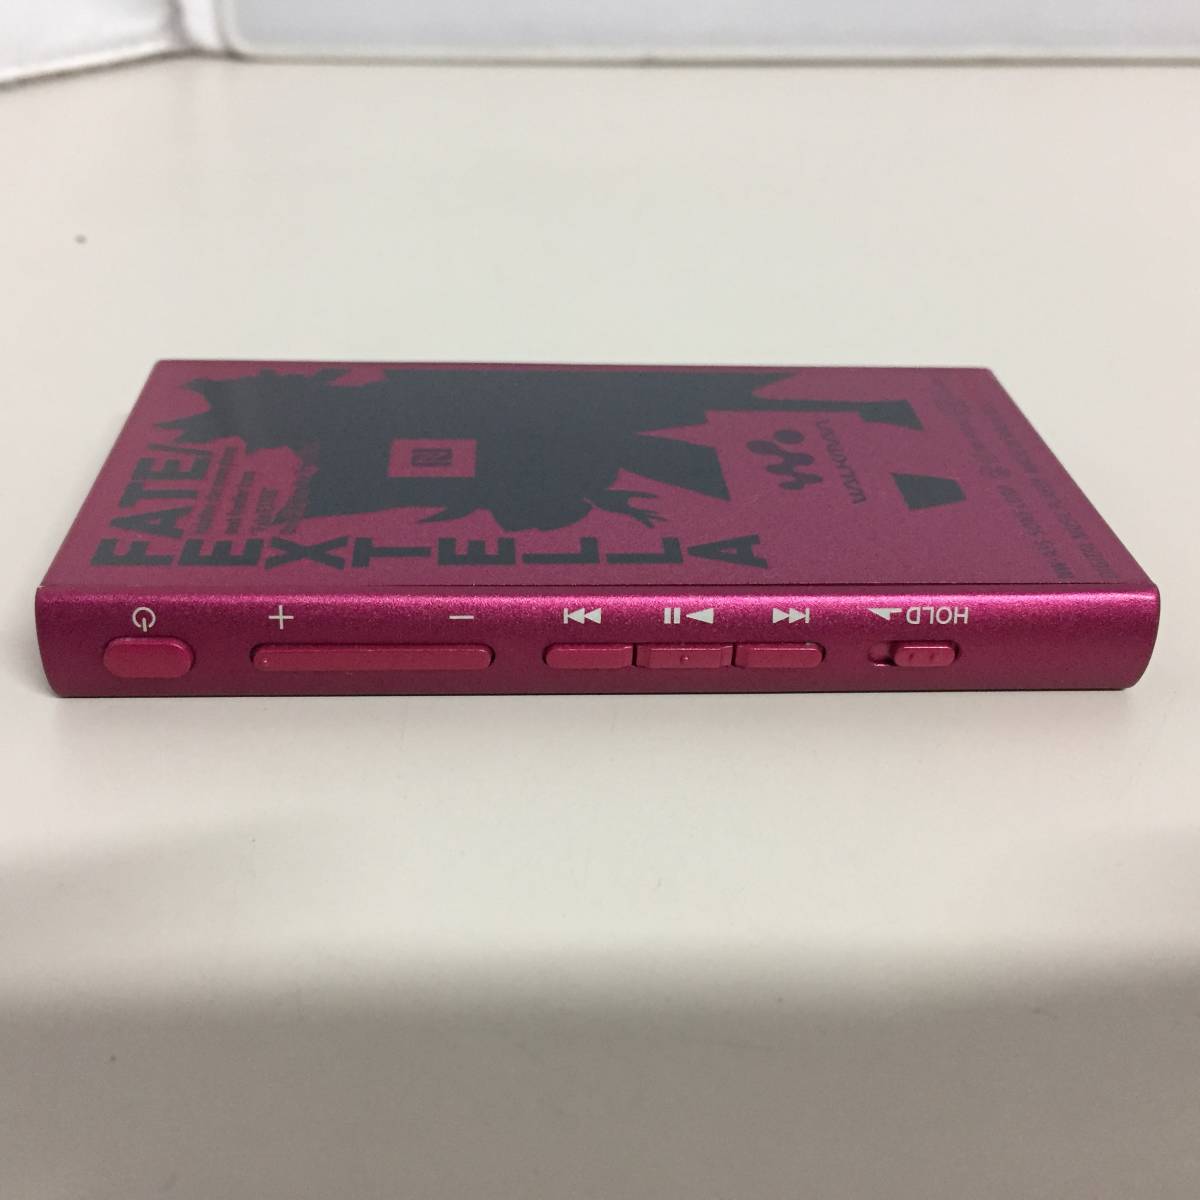 Fate/EXTELLA Edition Walkman Aシリーズ | tspea.org